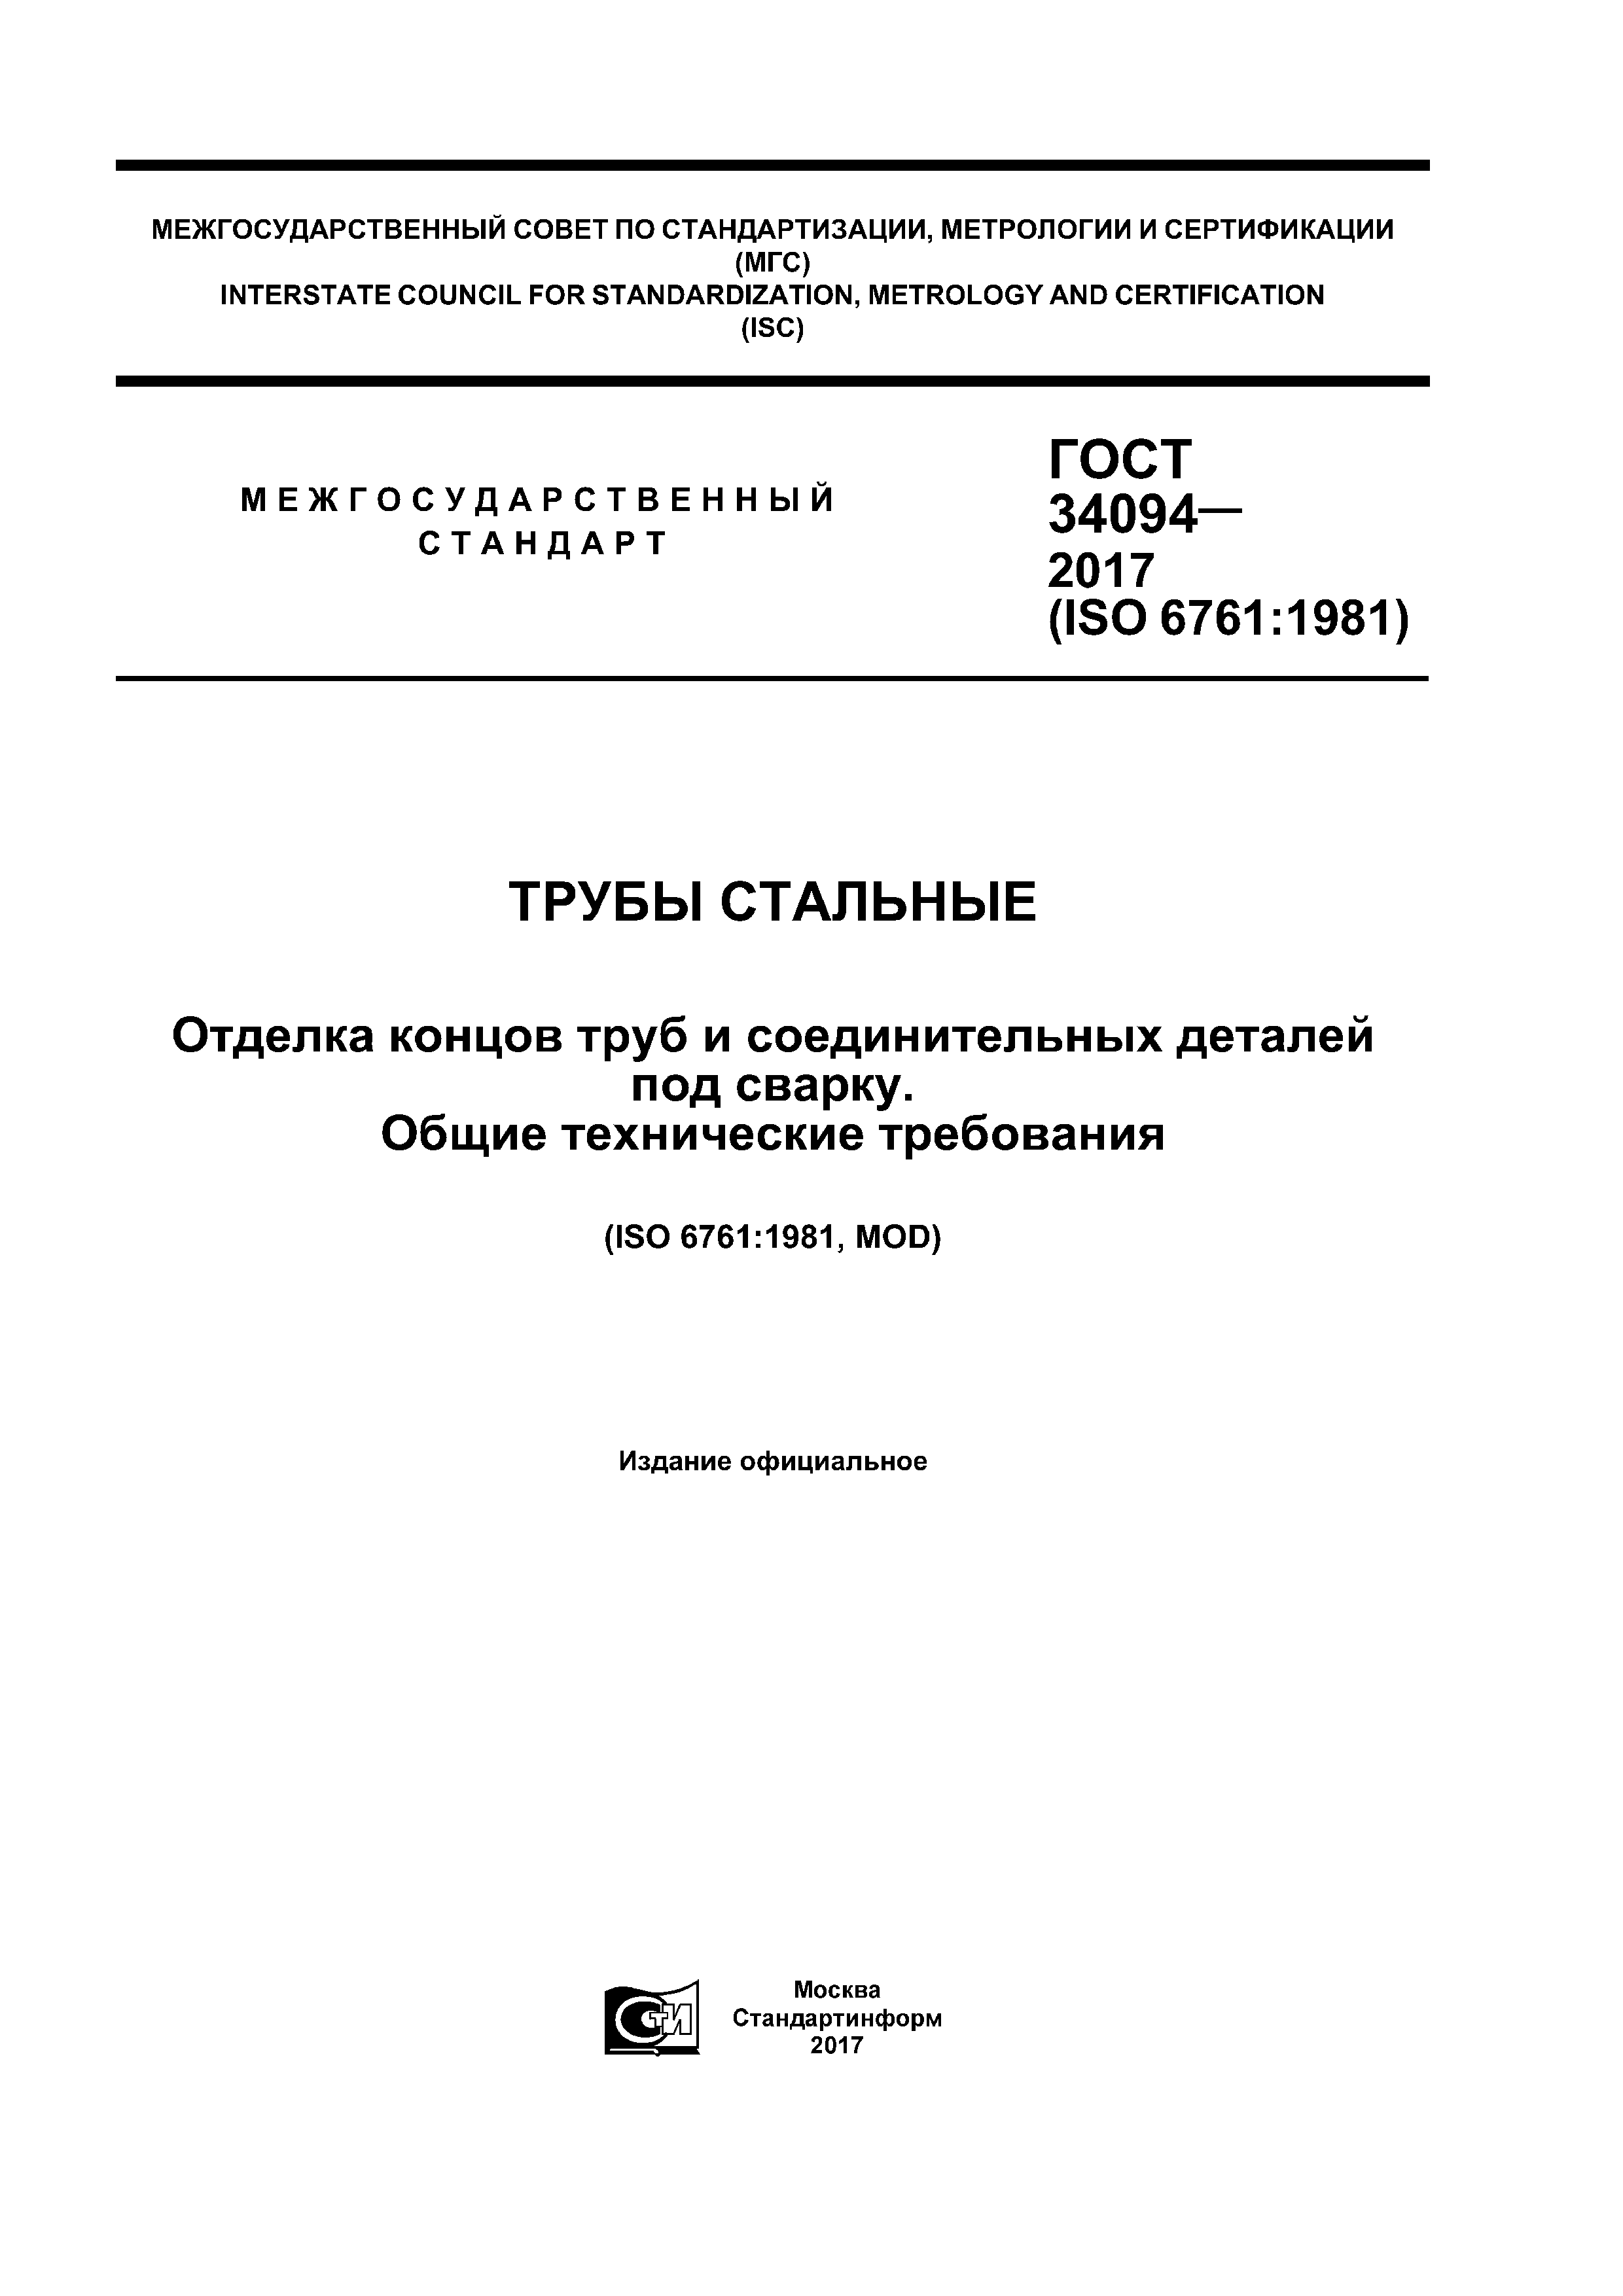 ГОСТ 34094-2017